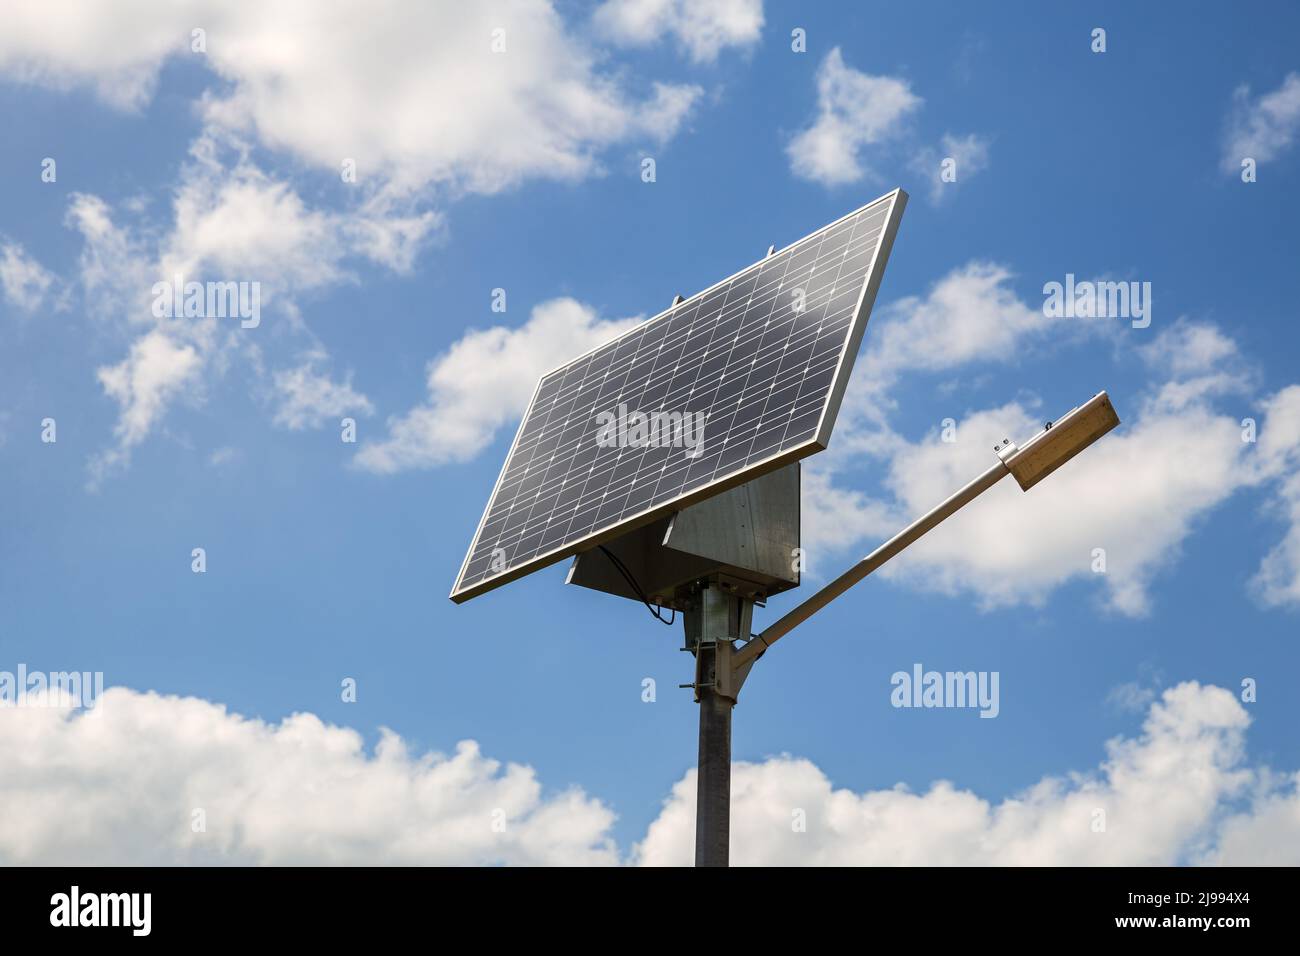 Solar-powered street lamp against the blue sky Stock Photo